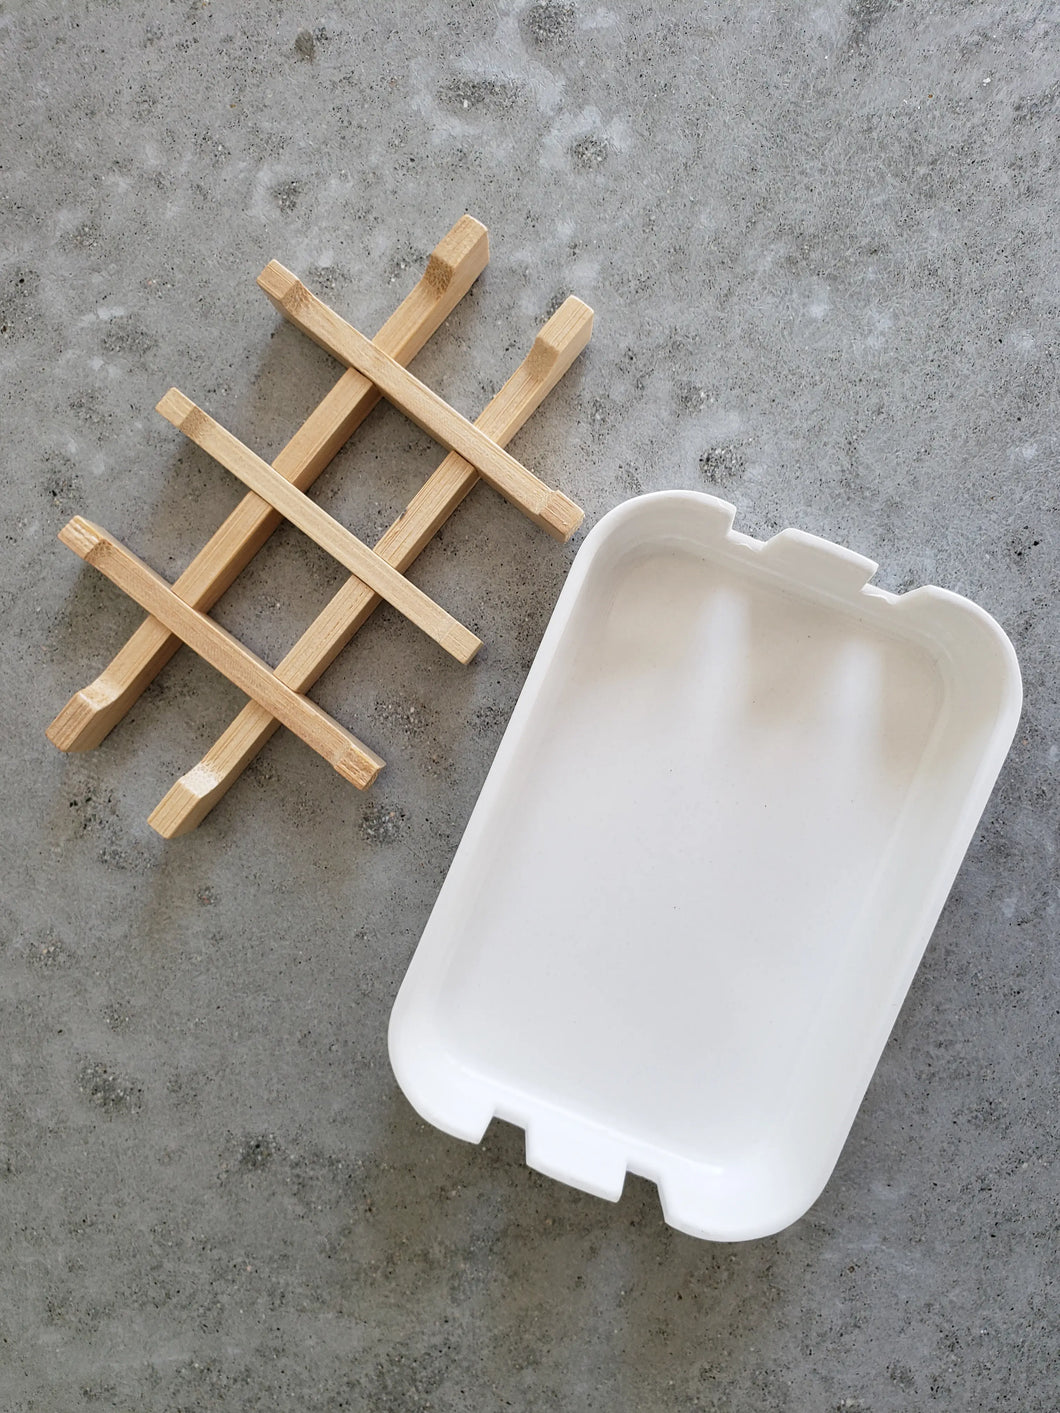 Zero Waste soap dish made of 100% bamboo and cornstarch